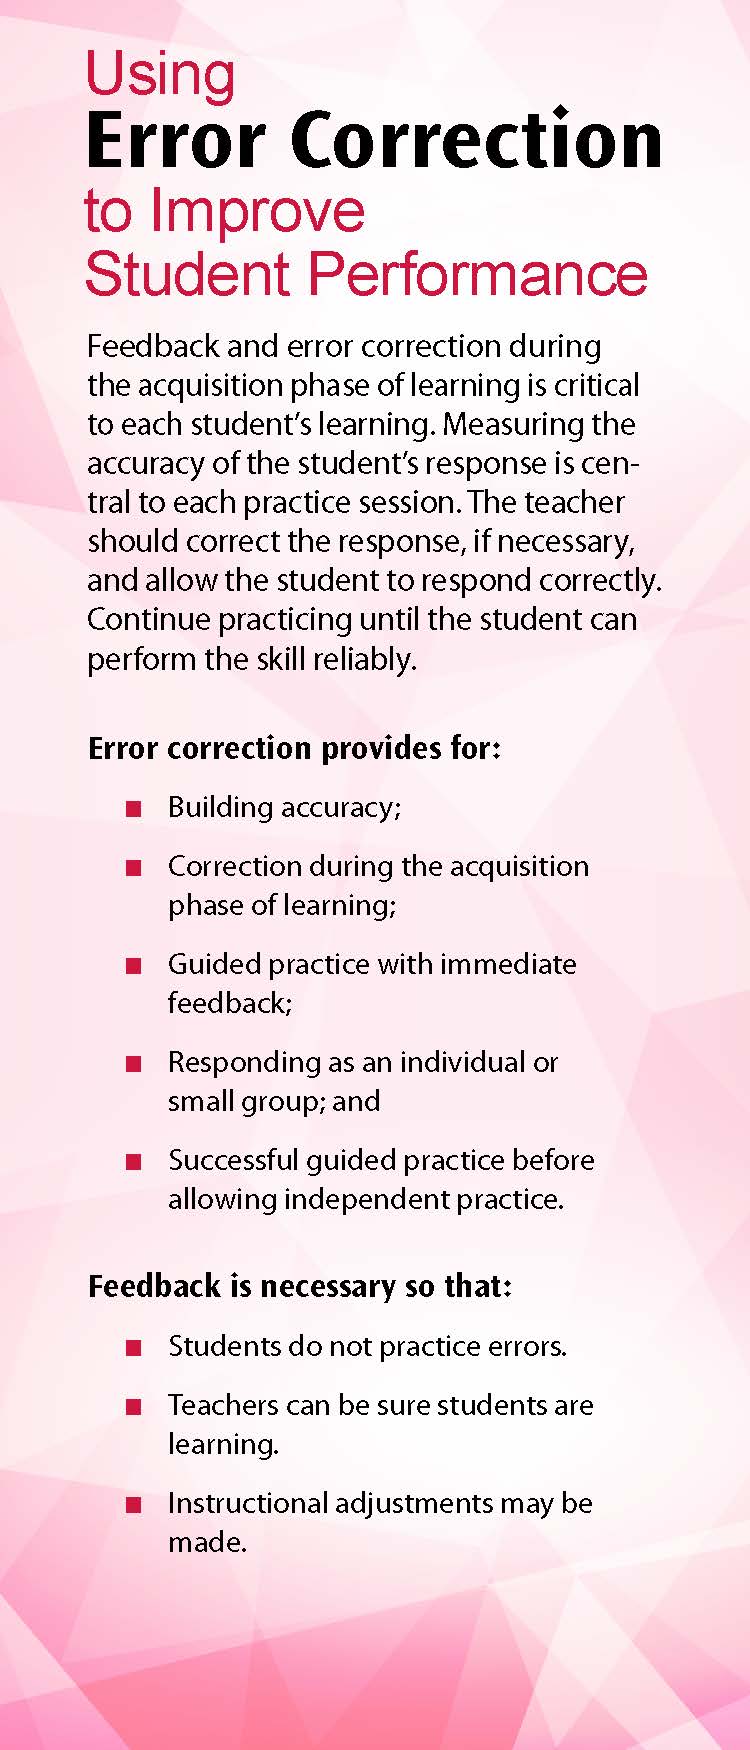 Using Error Correction to Improve Student Performance